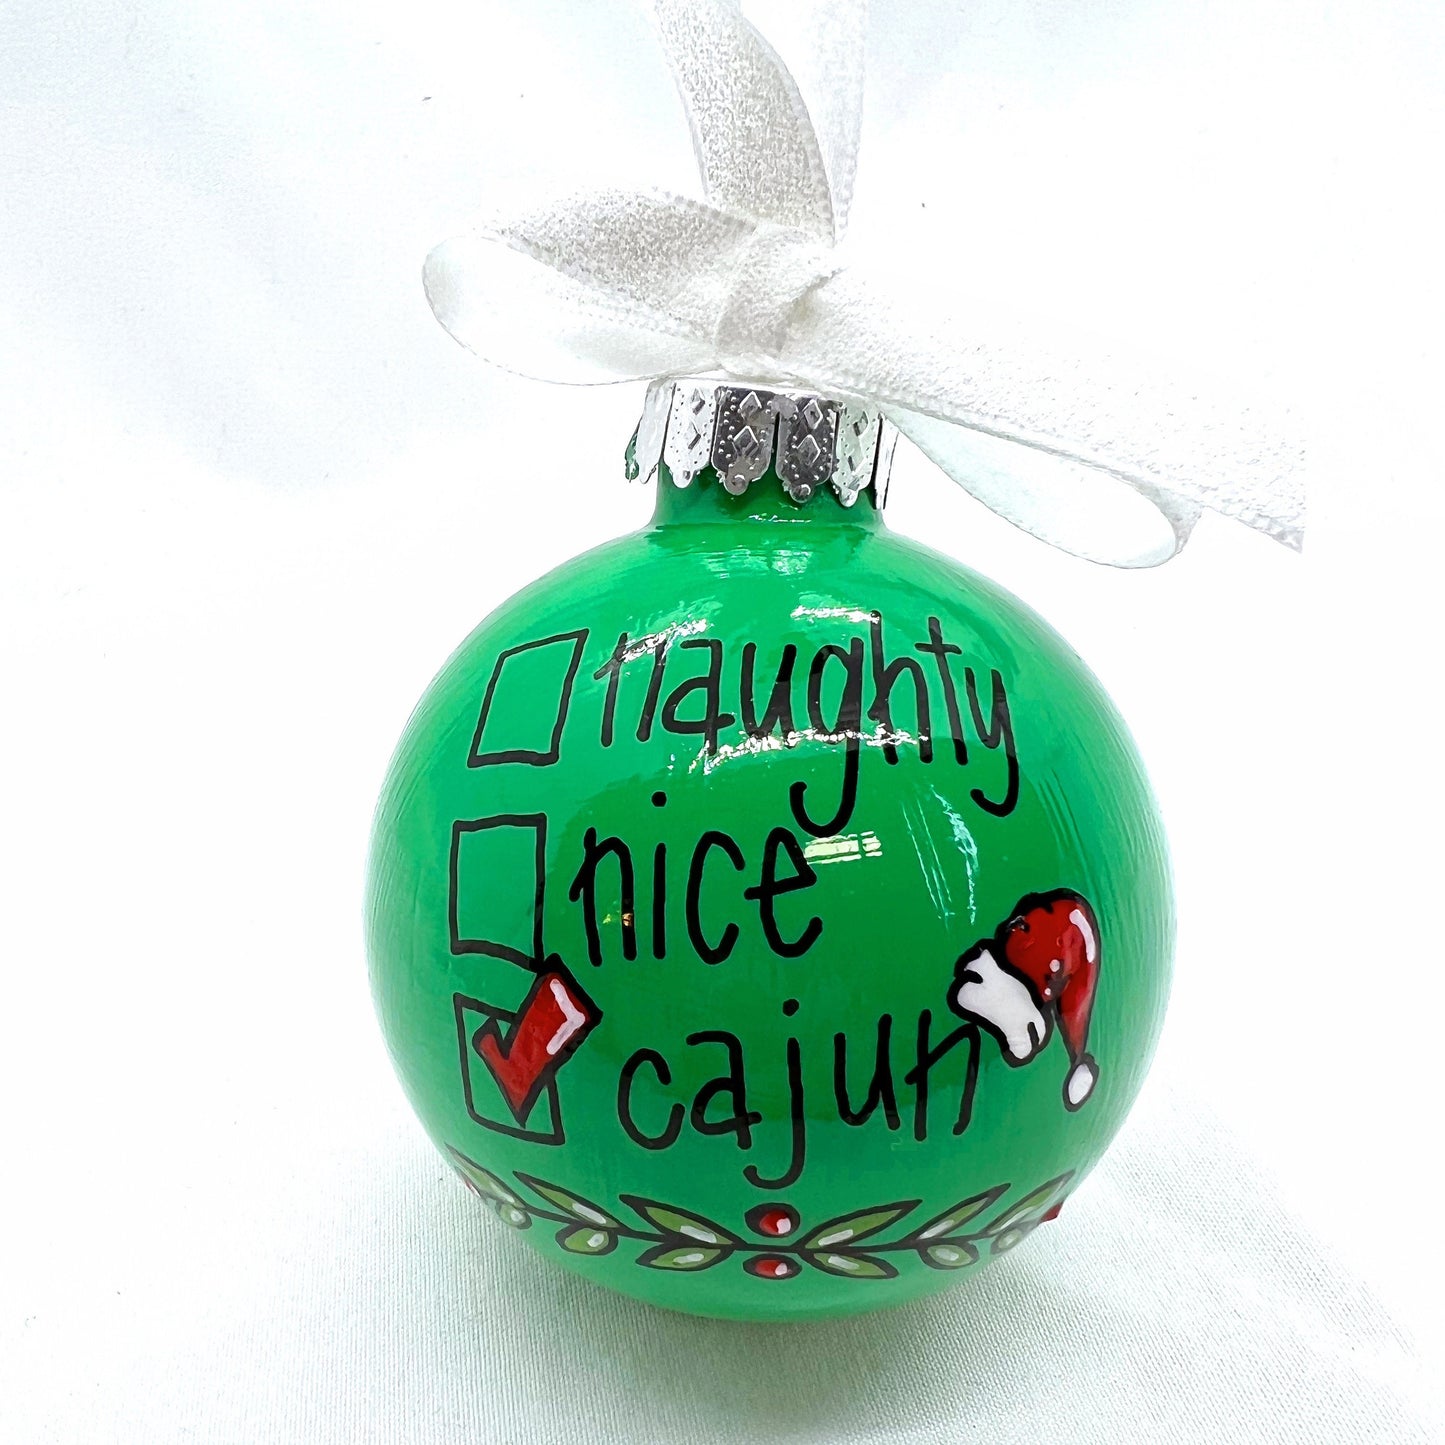 Cajun Ornament - Louisiana Ornament, Christmas Ornament, Holiday Ornament, Cajun Gift, Naughty or Nice, Ornament Exchange